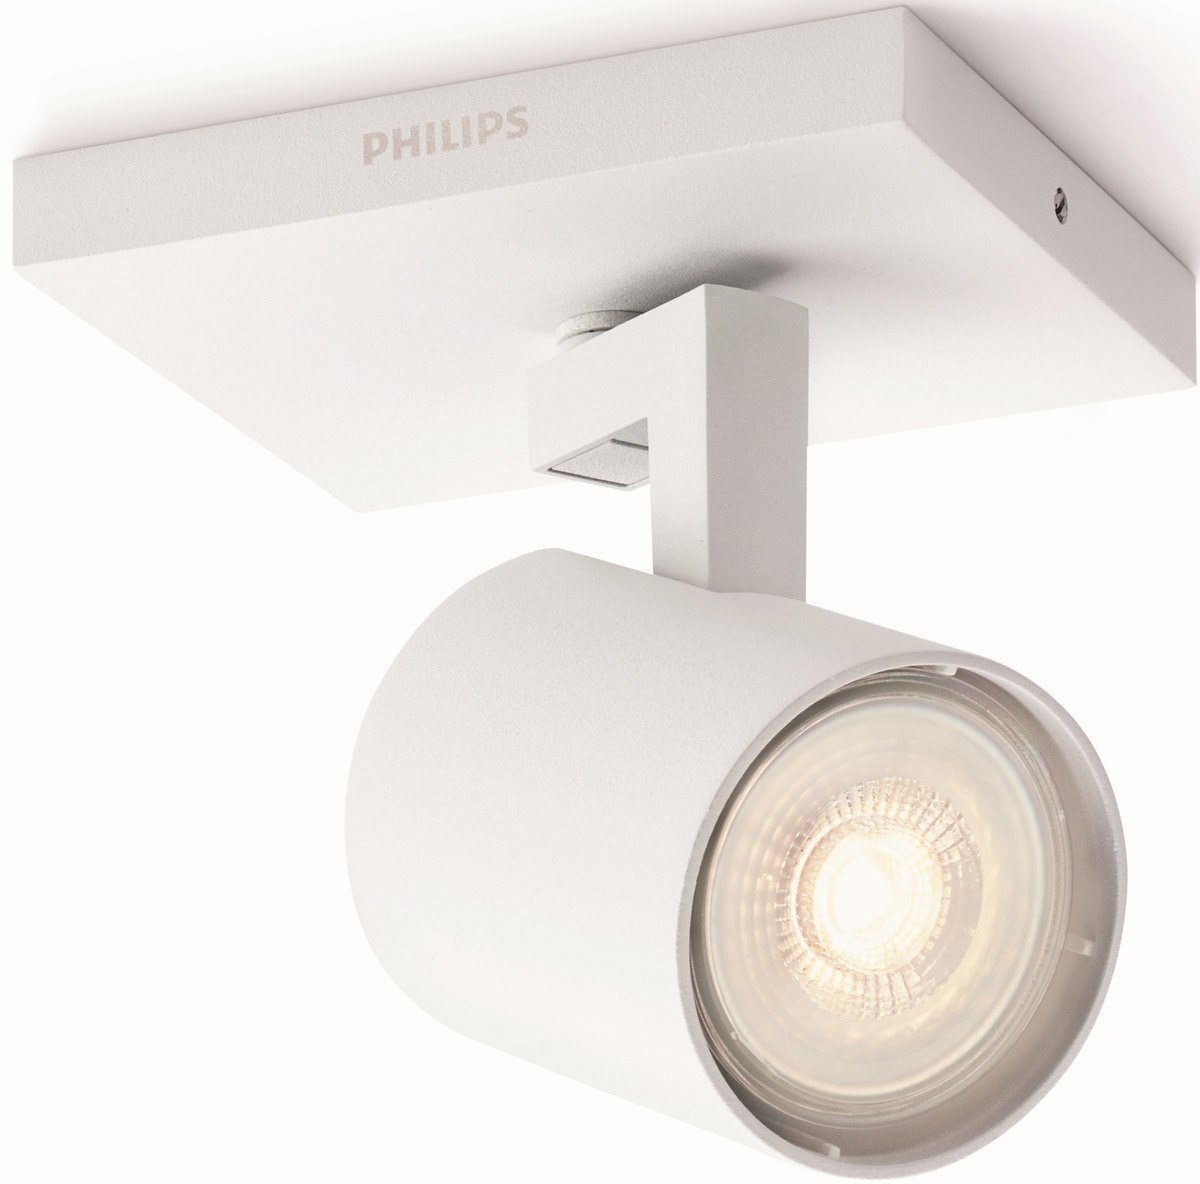 Philips Deckenspot Runner, LED wechselbar, 1flg. Weiß myLiving 230lm, Warmweiß, LED Spot